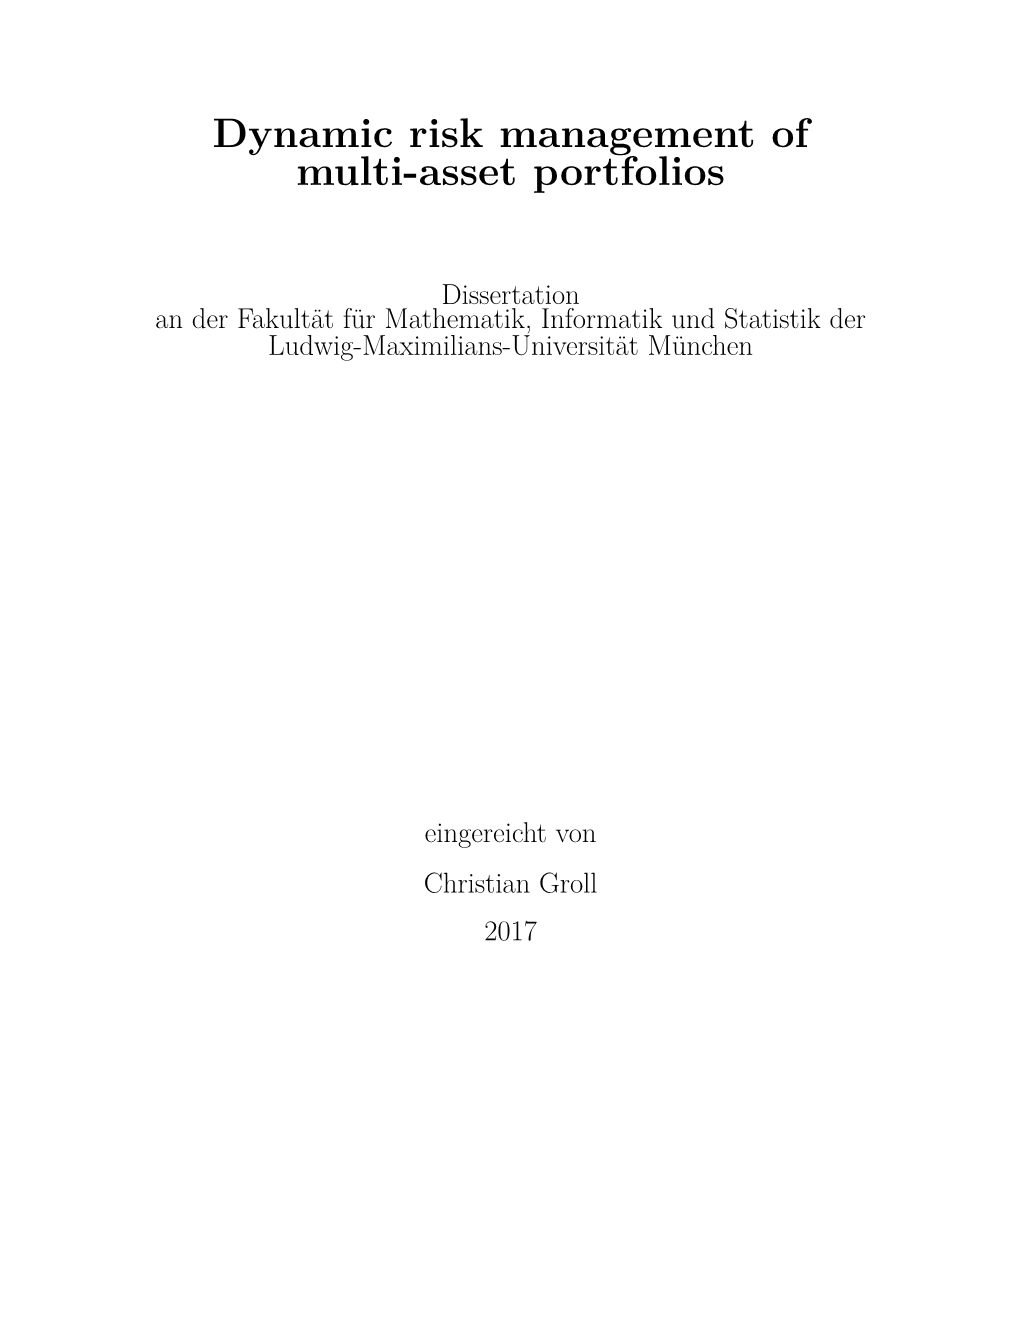 Dynamic Risk Management of Multi-Asset Portfolios